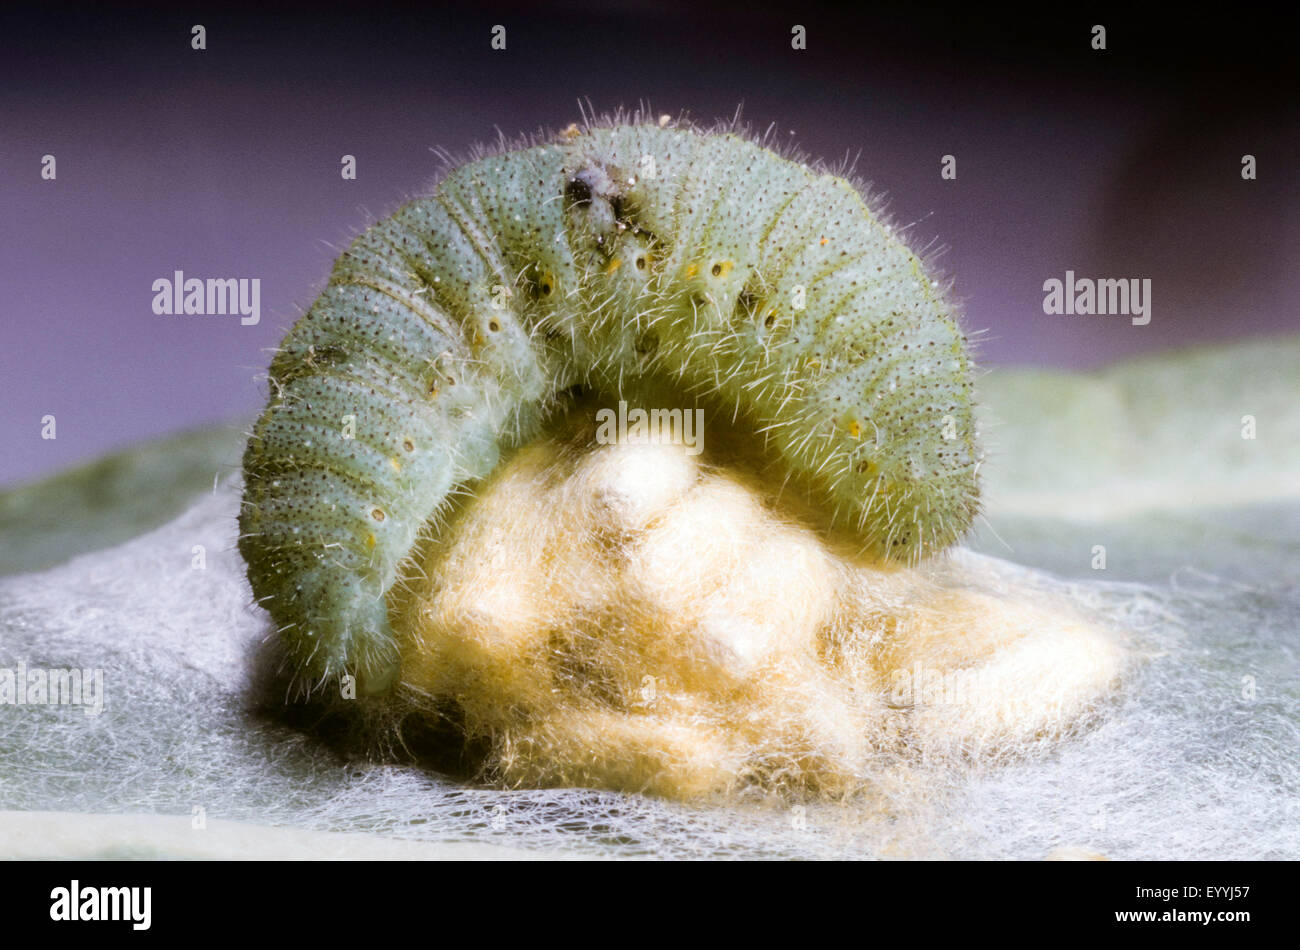 White Butterfly, parásito apanteles común (Cotesia glomerata, Apanteles glomeratus), las larvas de la oruga, parasitando a la oruga de la col blanca, Alemania Foto de stock